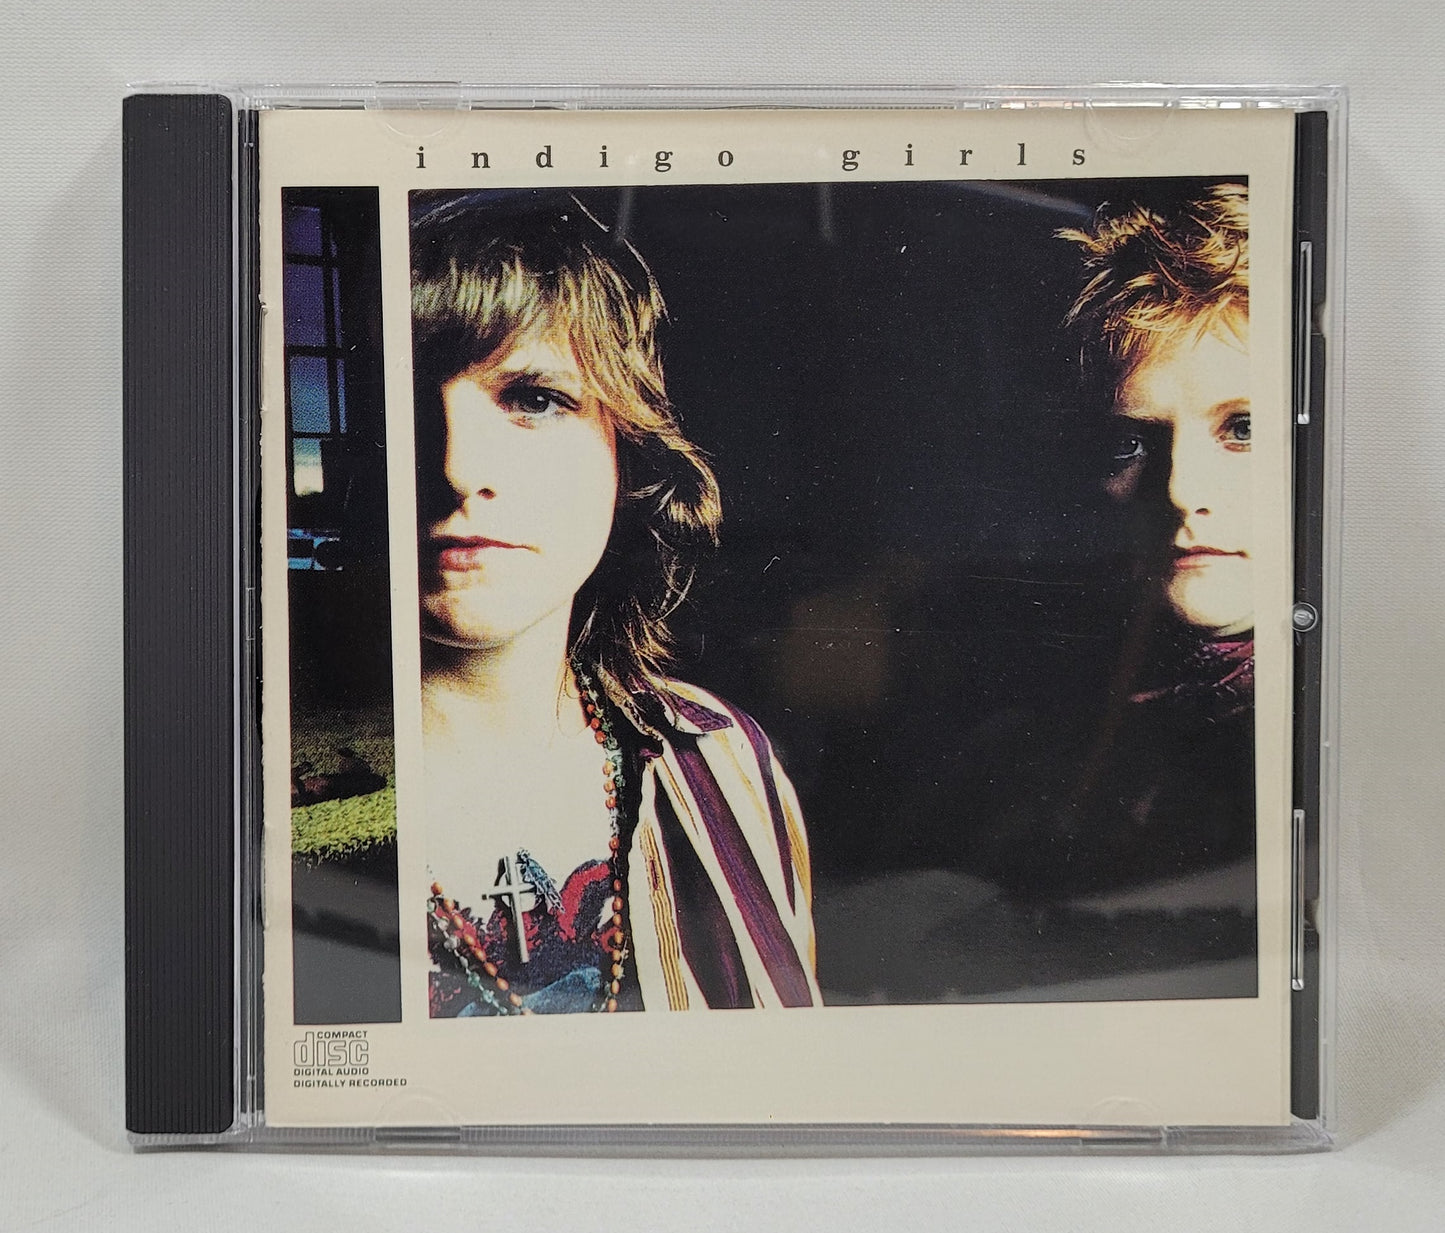 Indigo Girls - Indigo Girls [1989 Used CD]